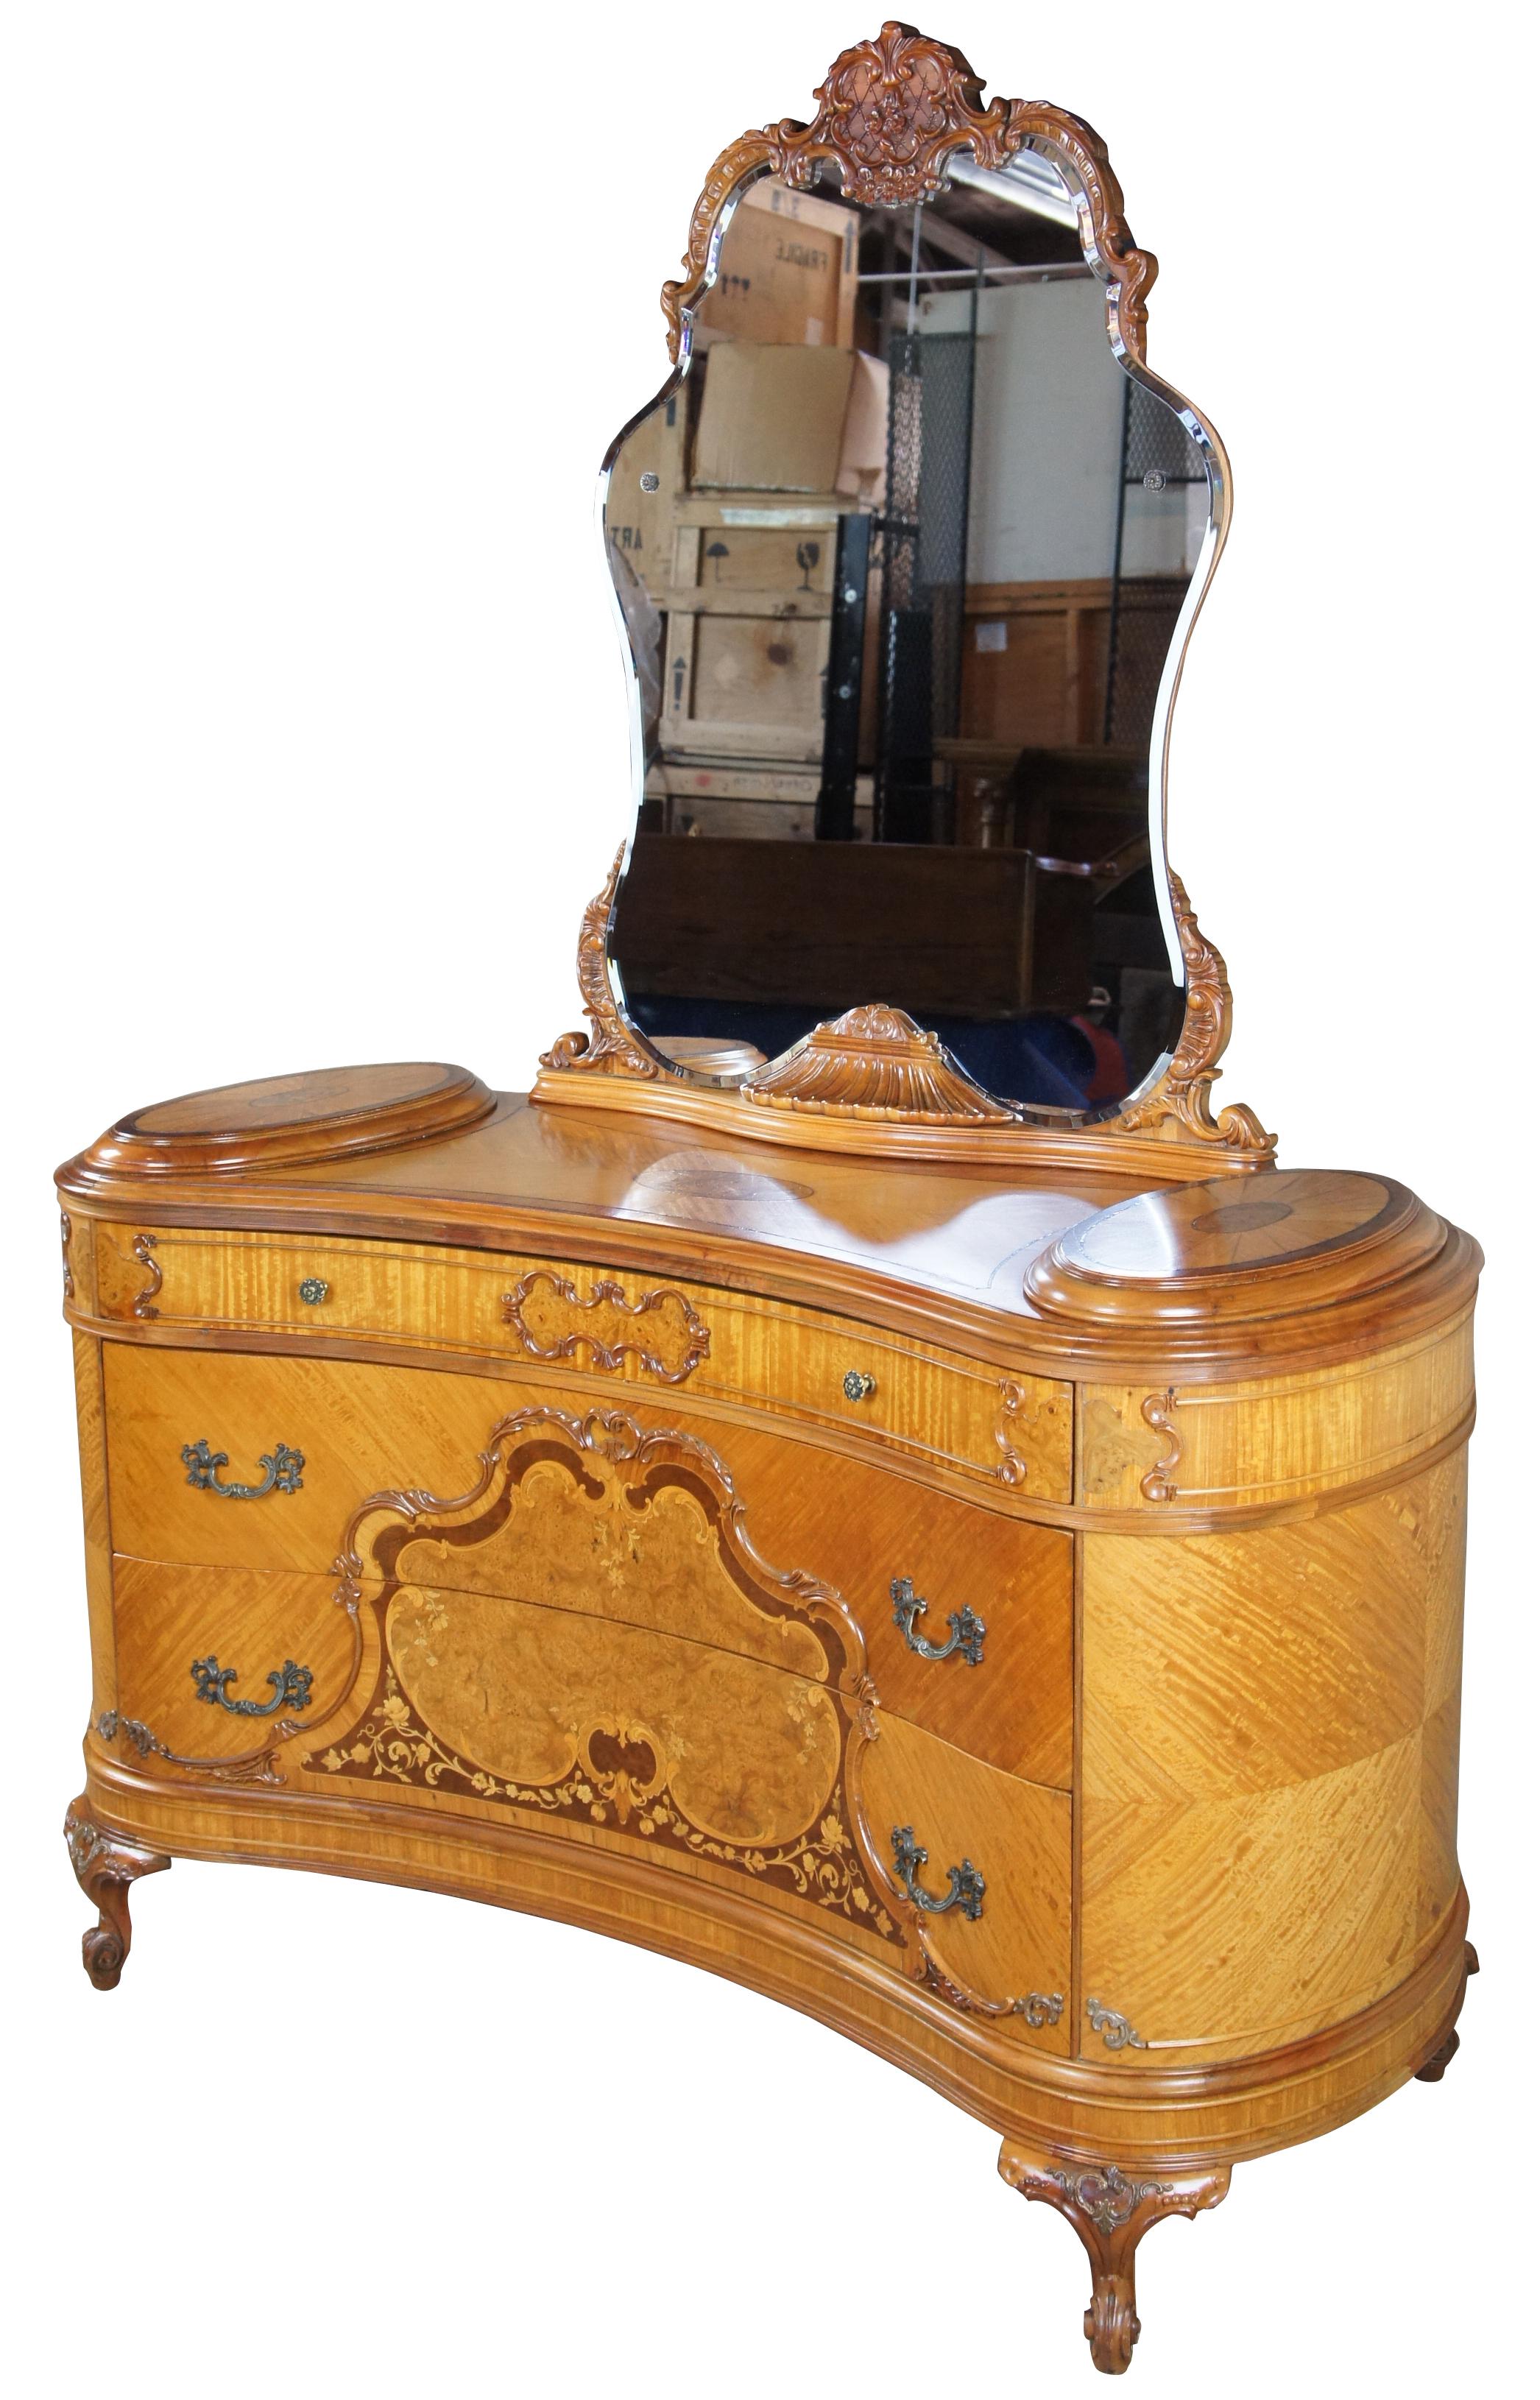 vanity dresser with mirror